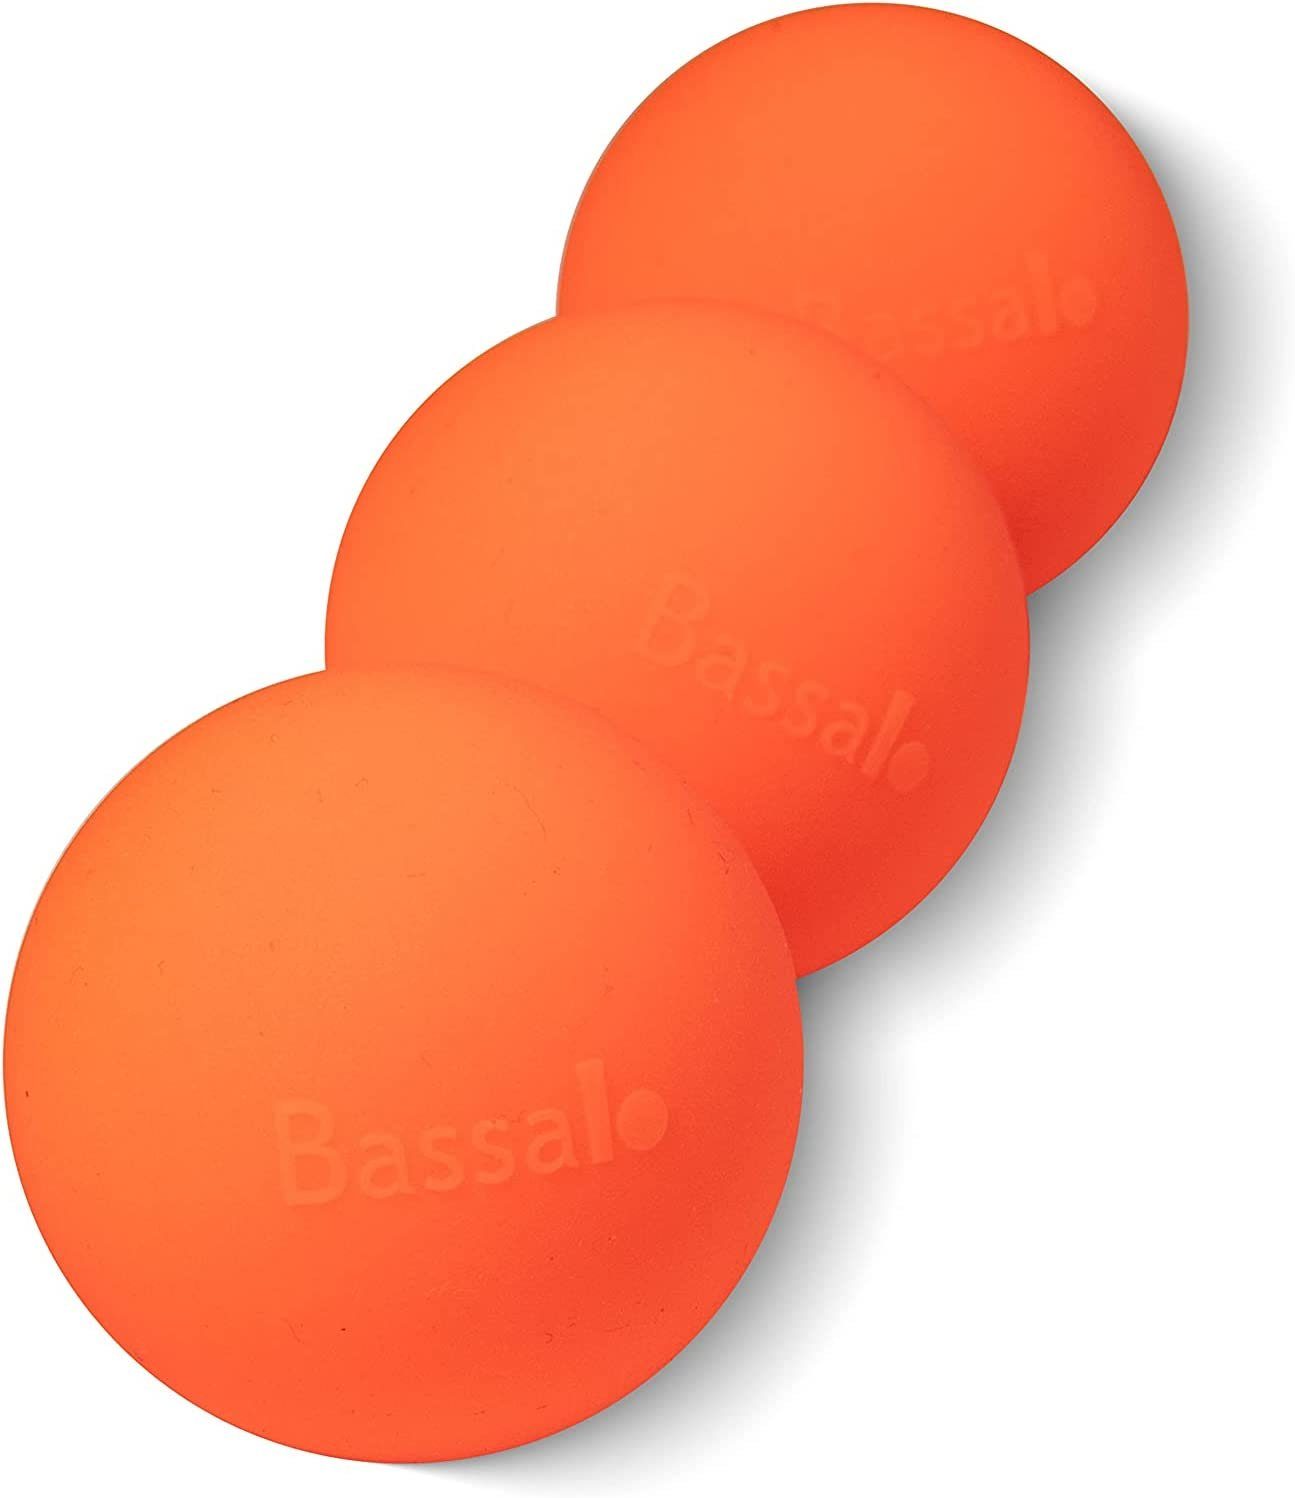 2er Bassalo Made und - Germany Plus Bälle, Outdoor 2 in Indoor, Cupball Spielanleitung, Becher, 4 Spielball Starter-Set